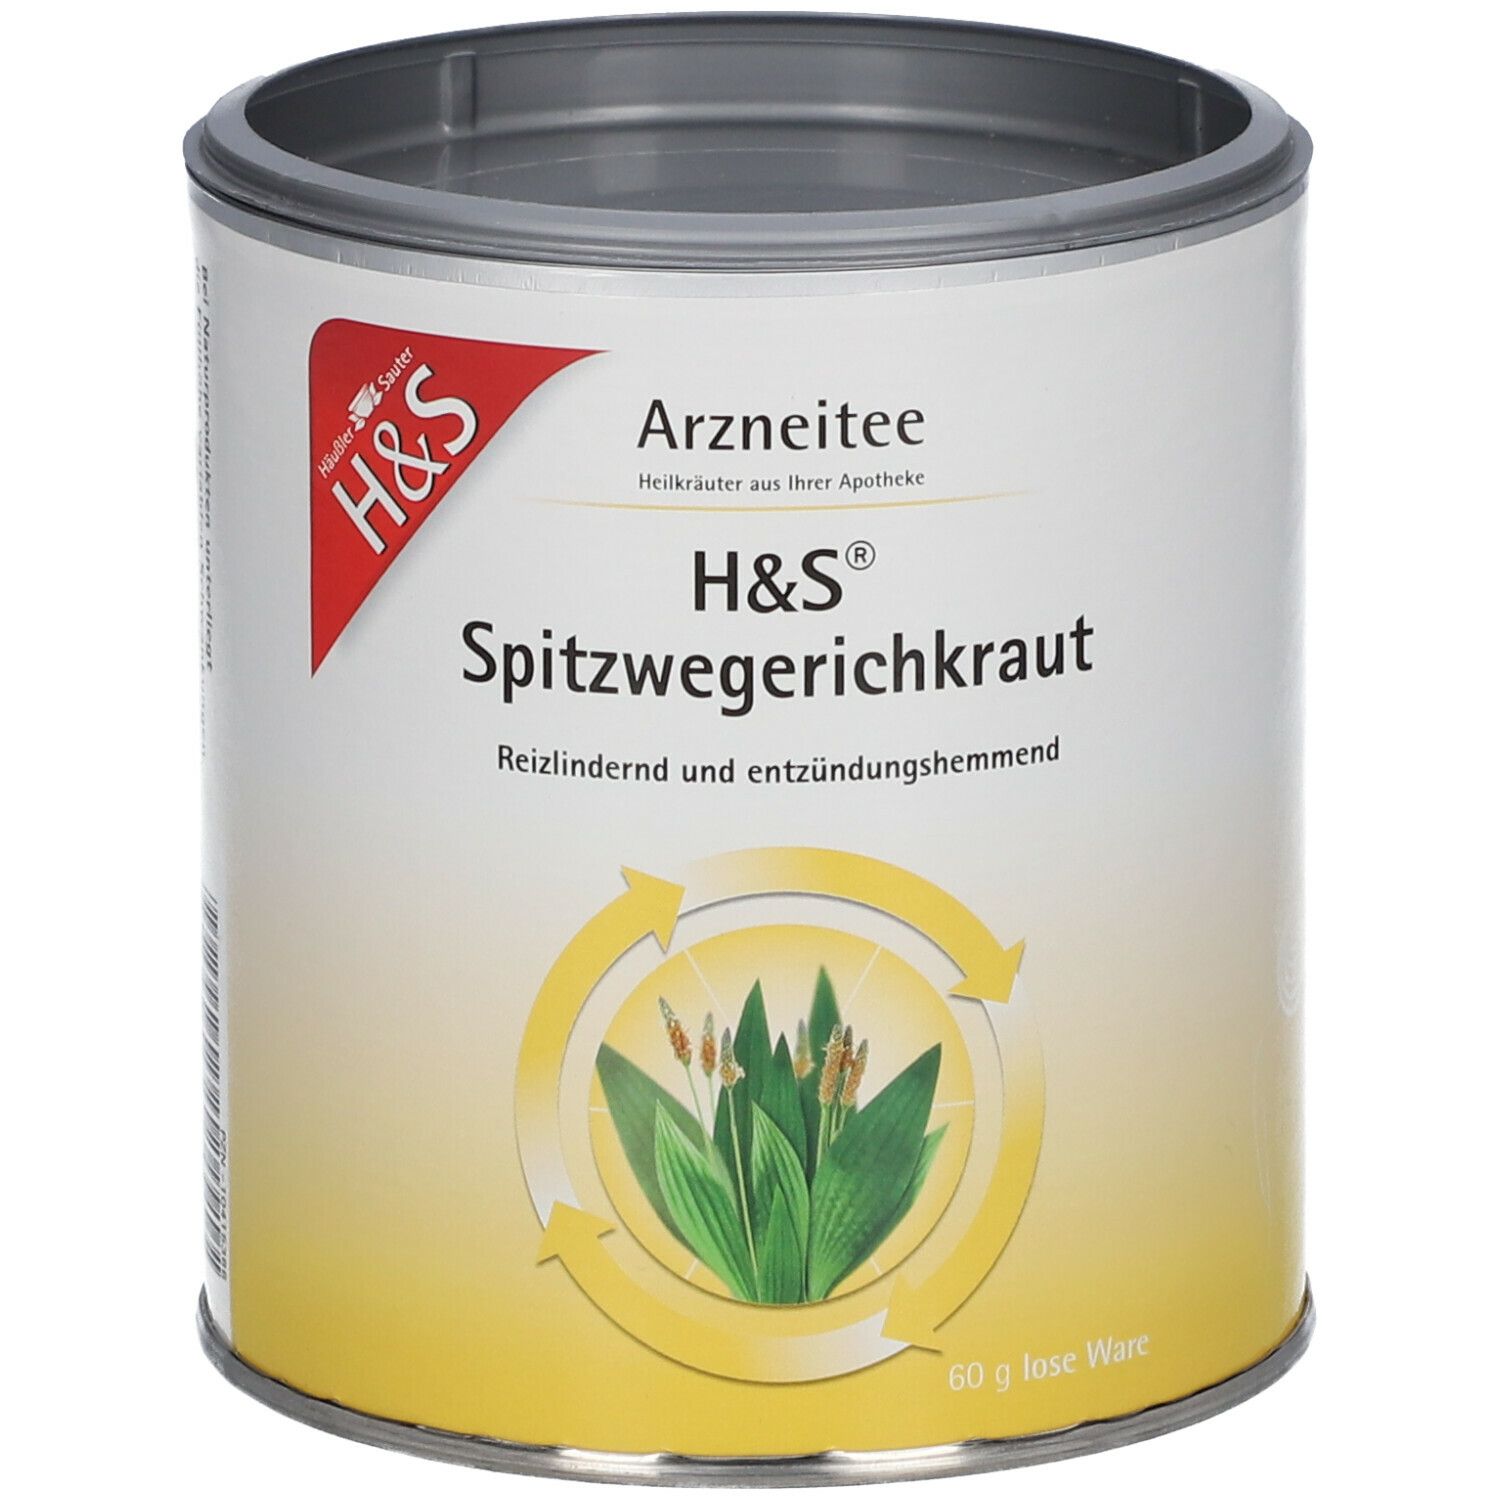 H&S Spitzwegerichkraut